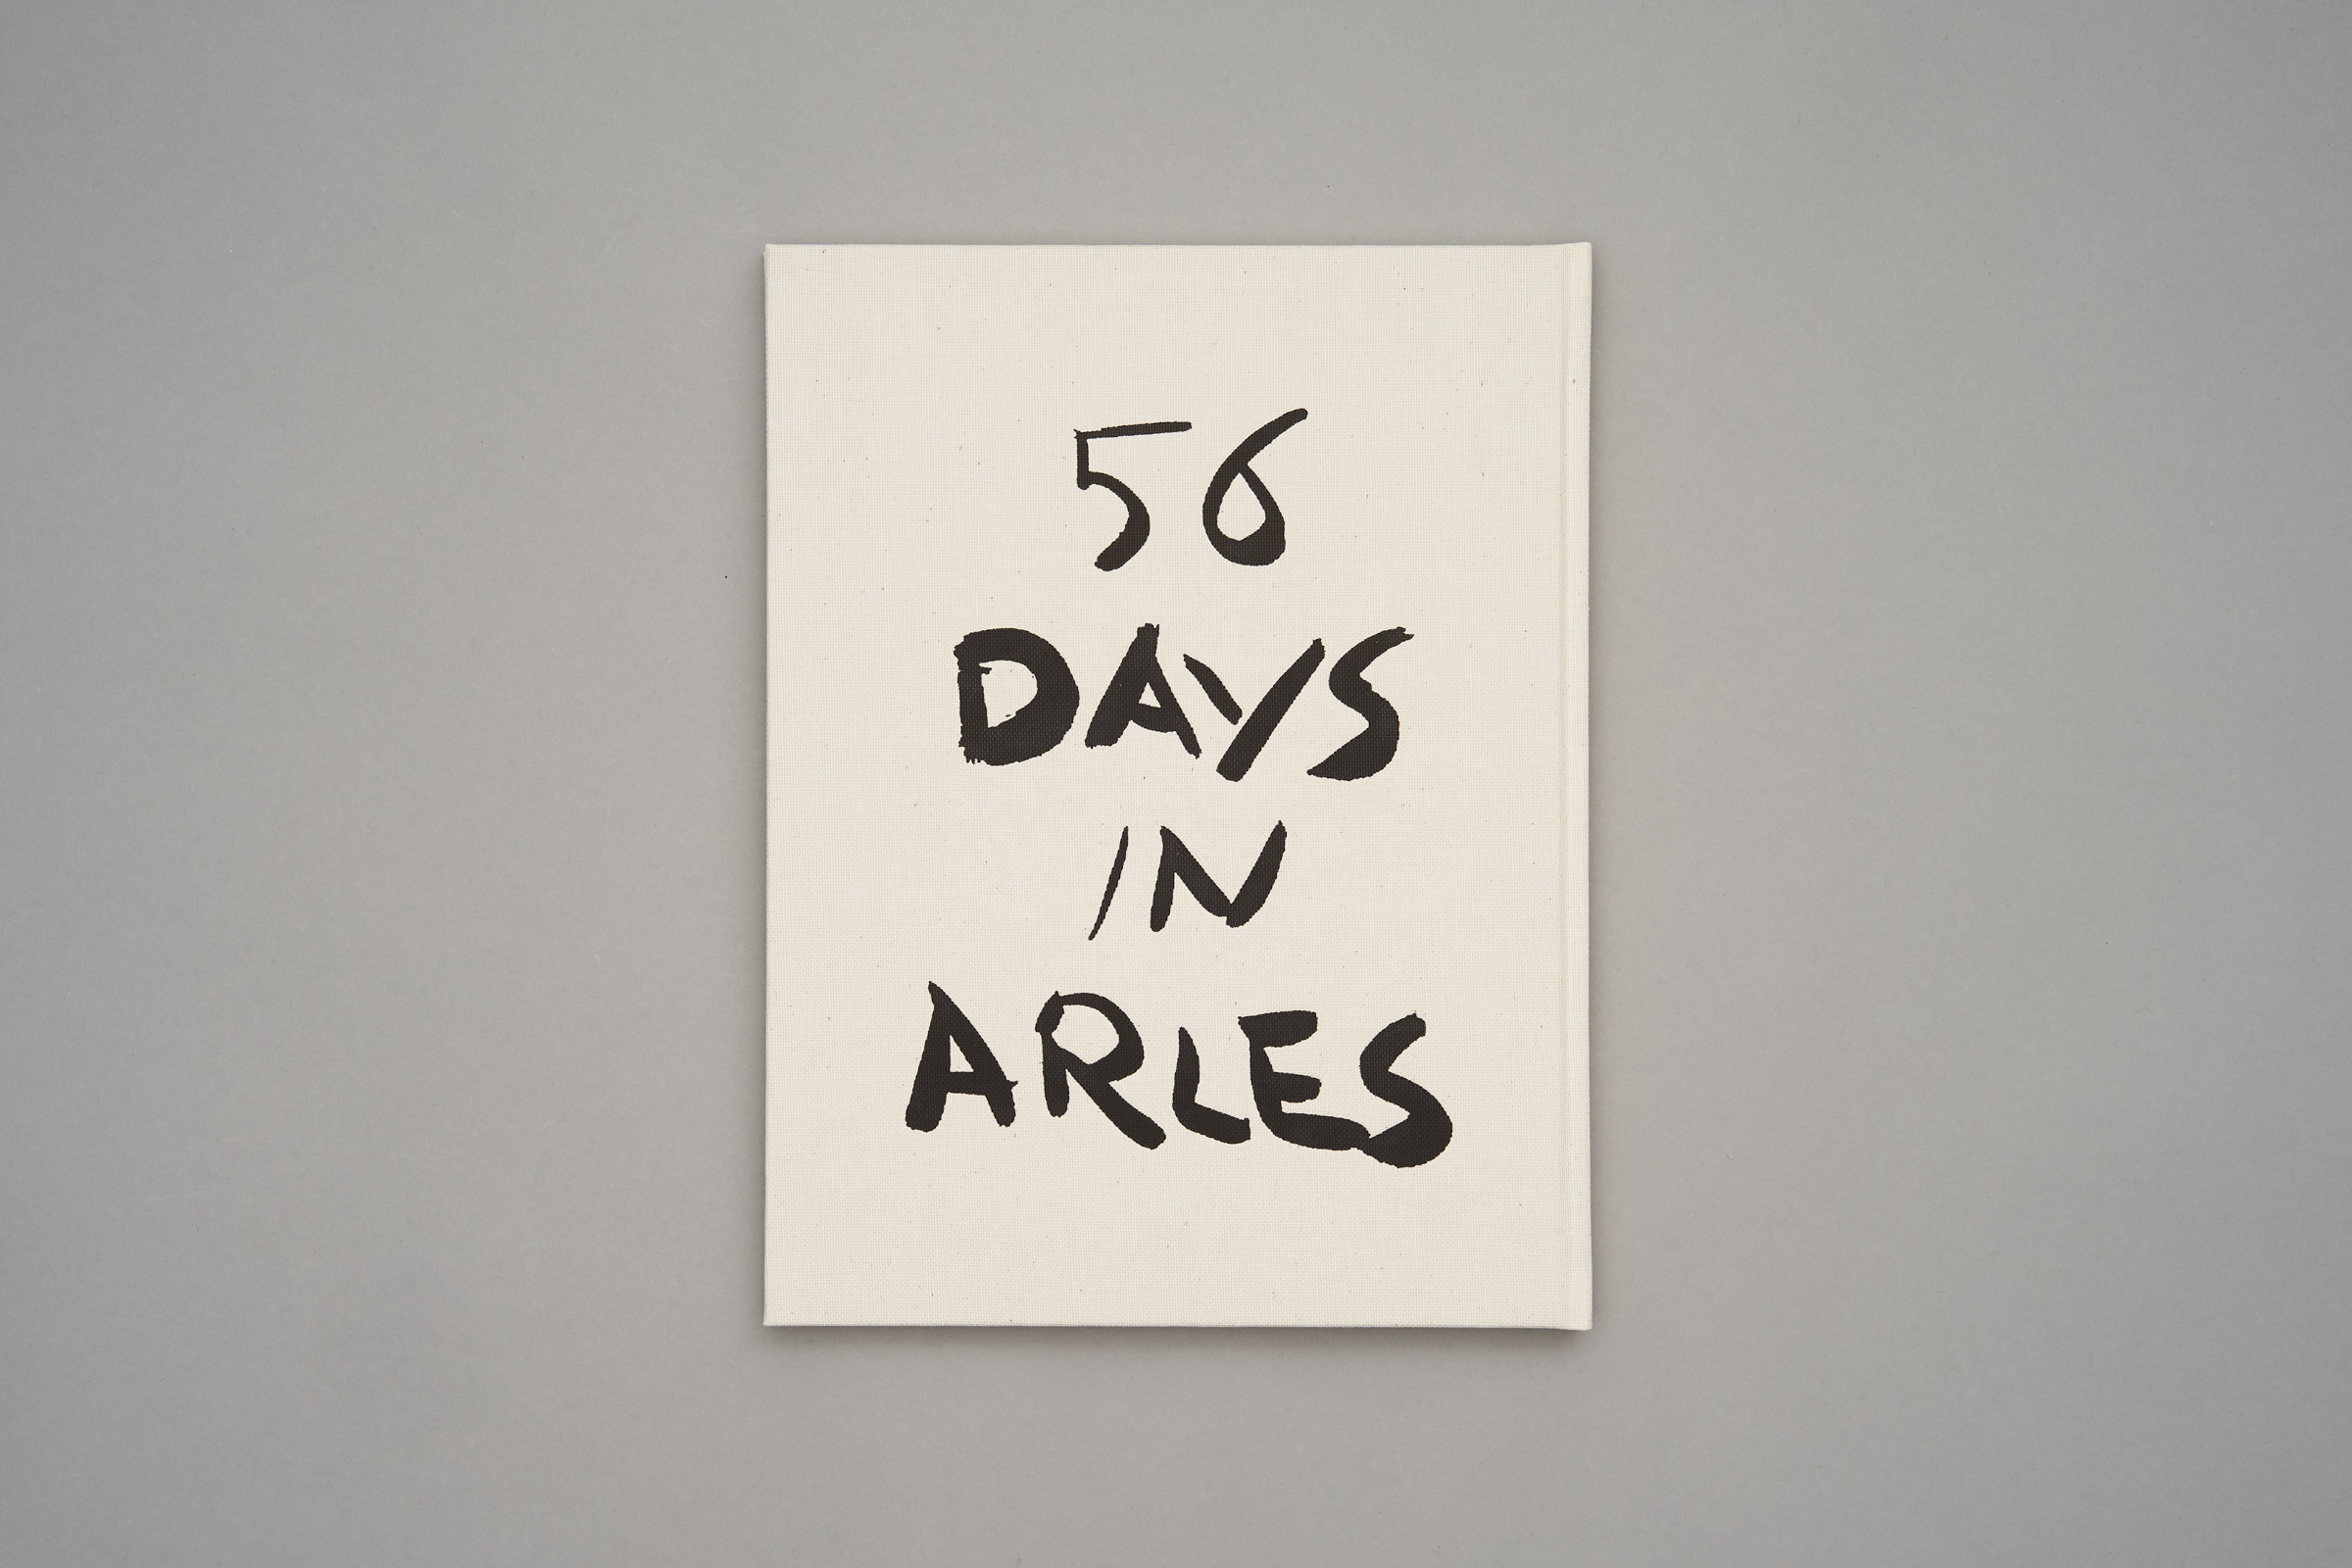 François Halard — 56 Days in Arles